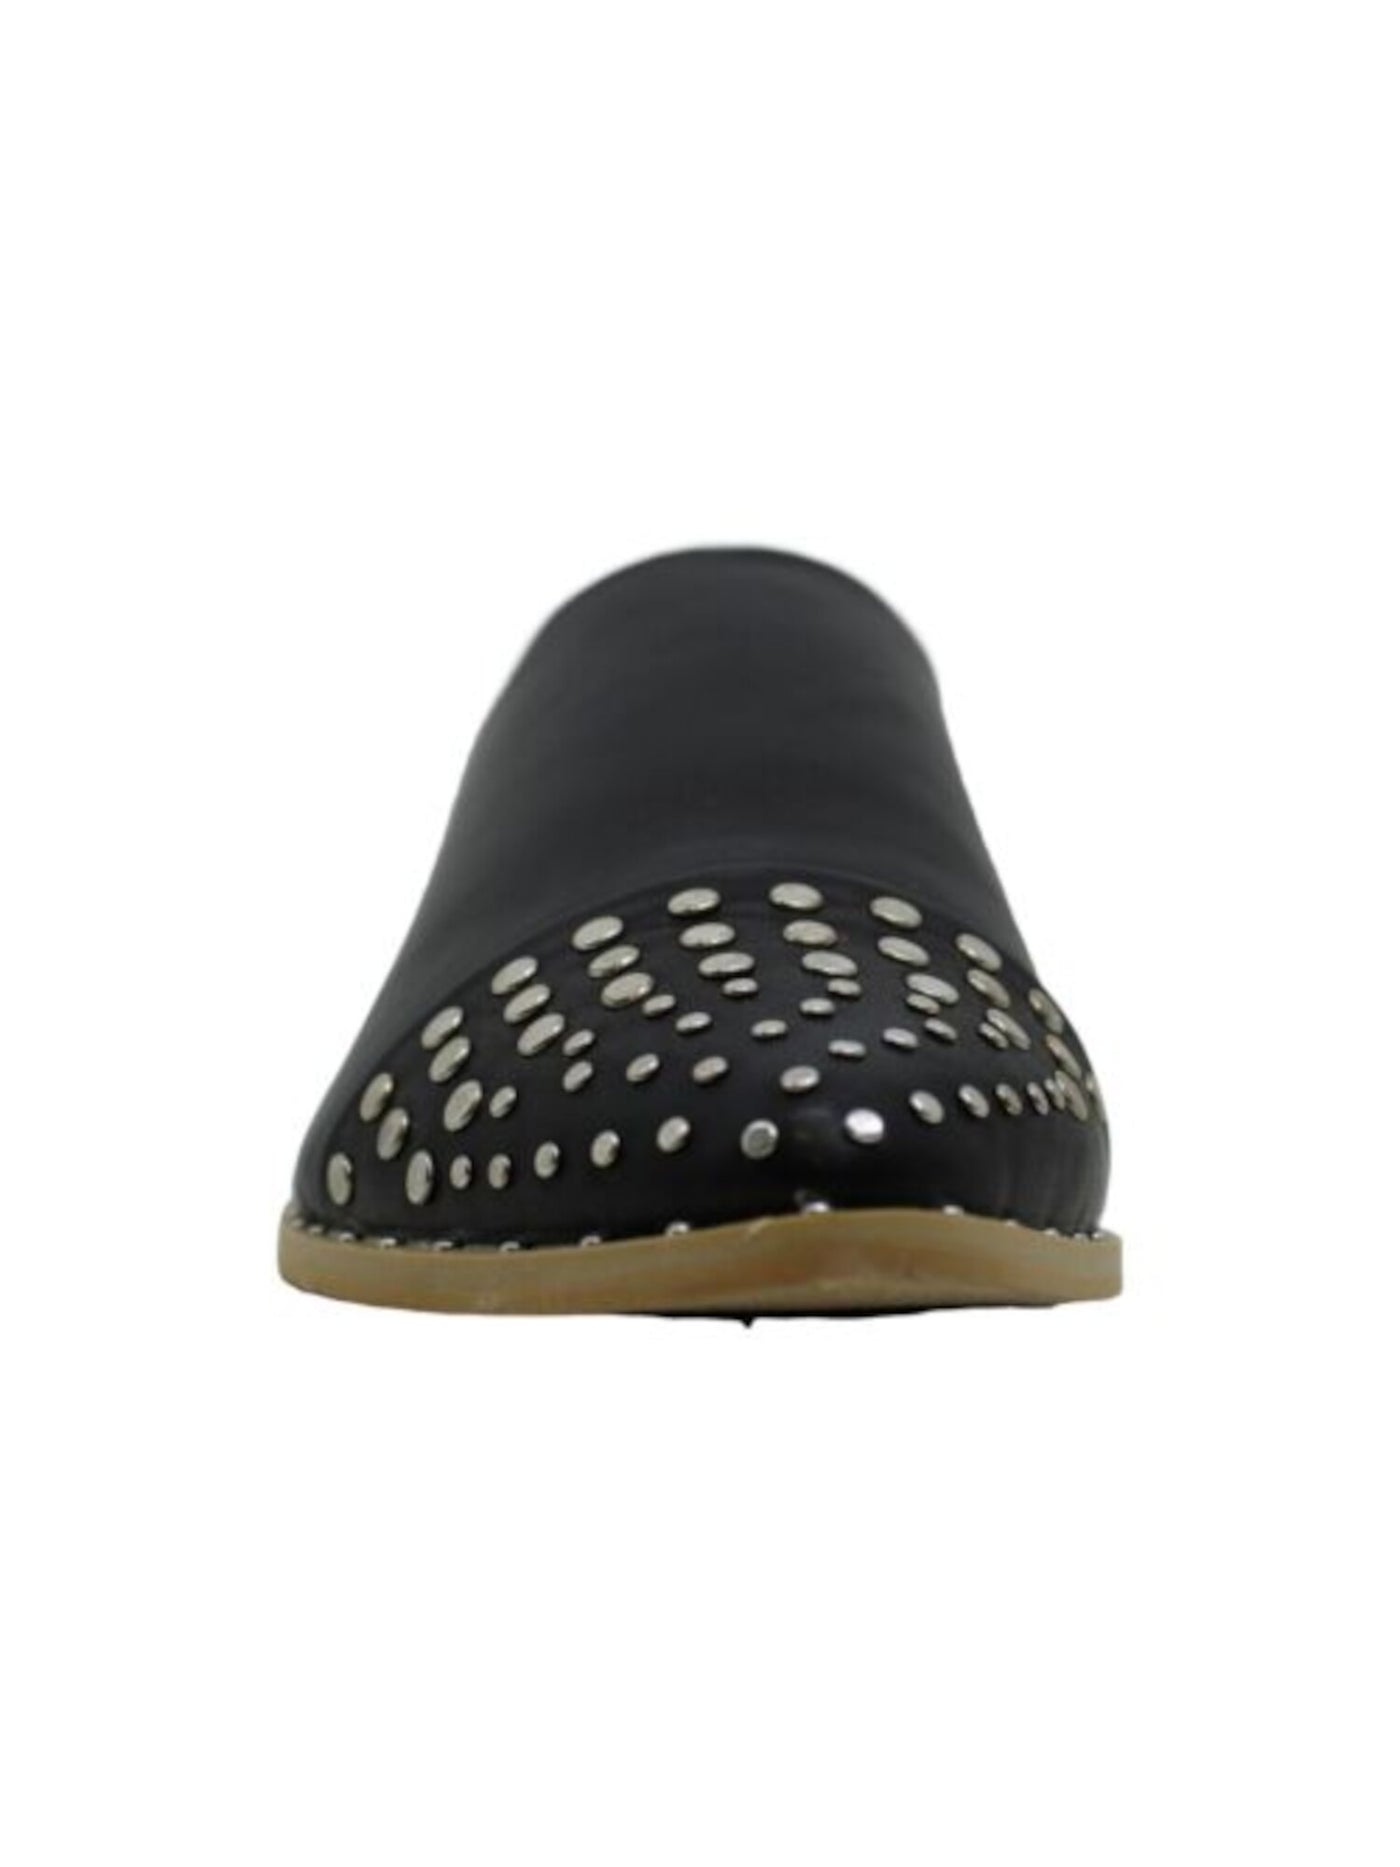 DOLCE VITA Womens Black Studded Padded Itzel Pointed Toe Block Heel Slip On Mules 6 M